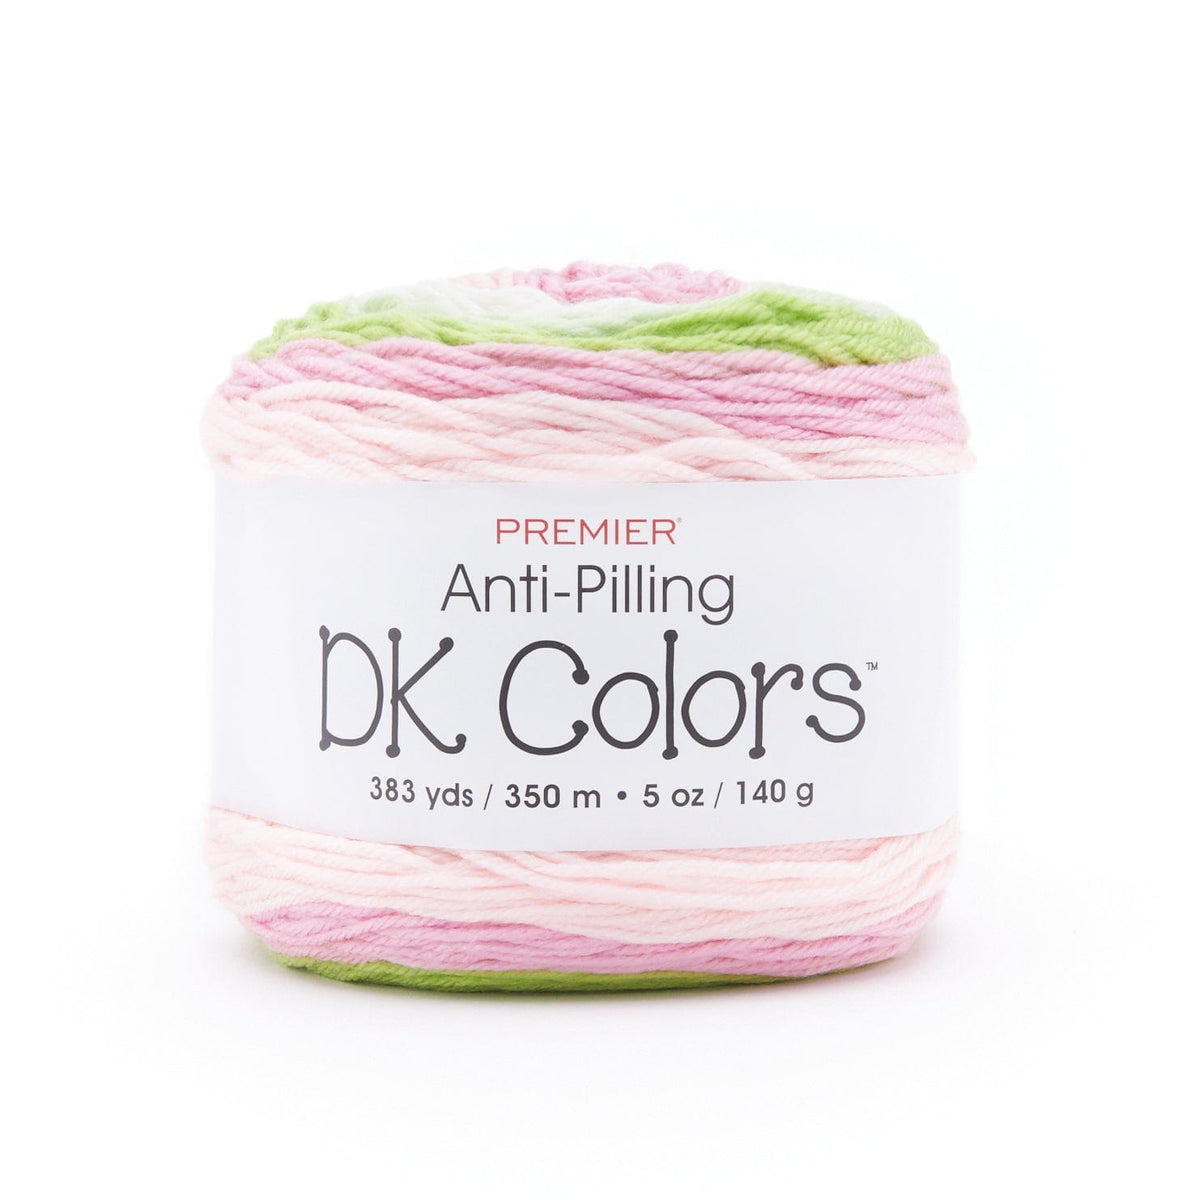 Premier Anti-pilling DK Colors Self-striping Yarn, Acrylic, Light Weight 